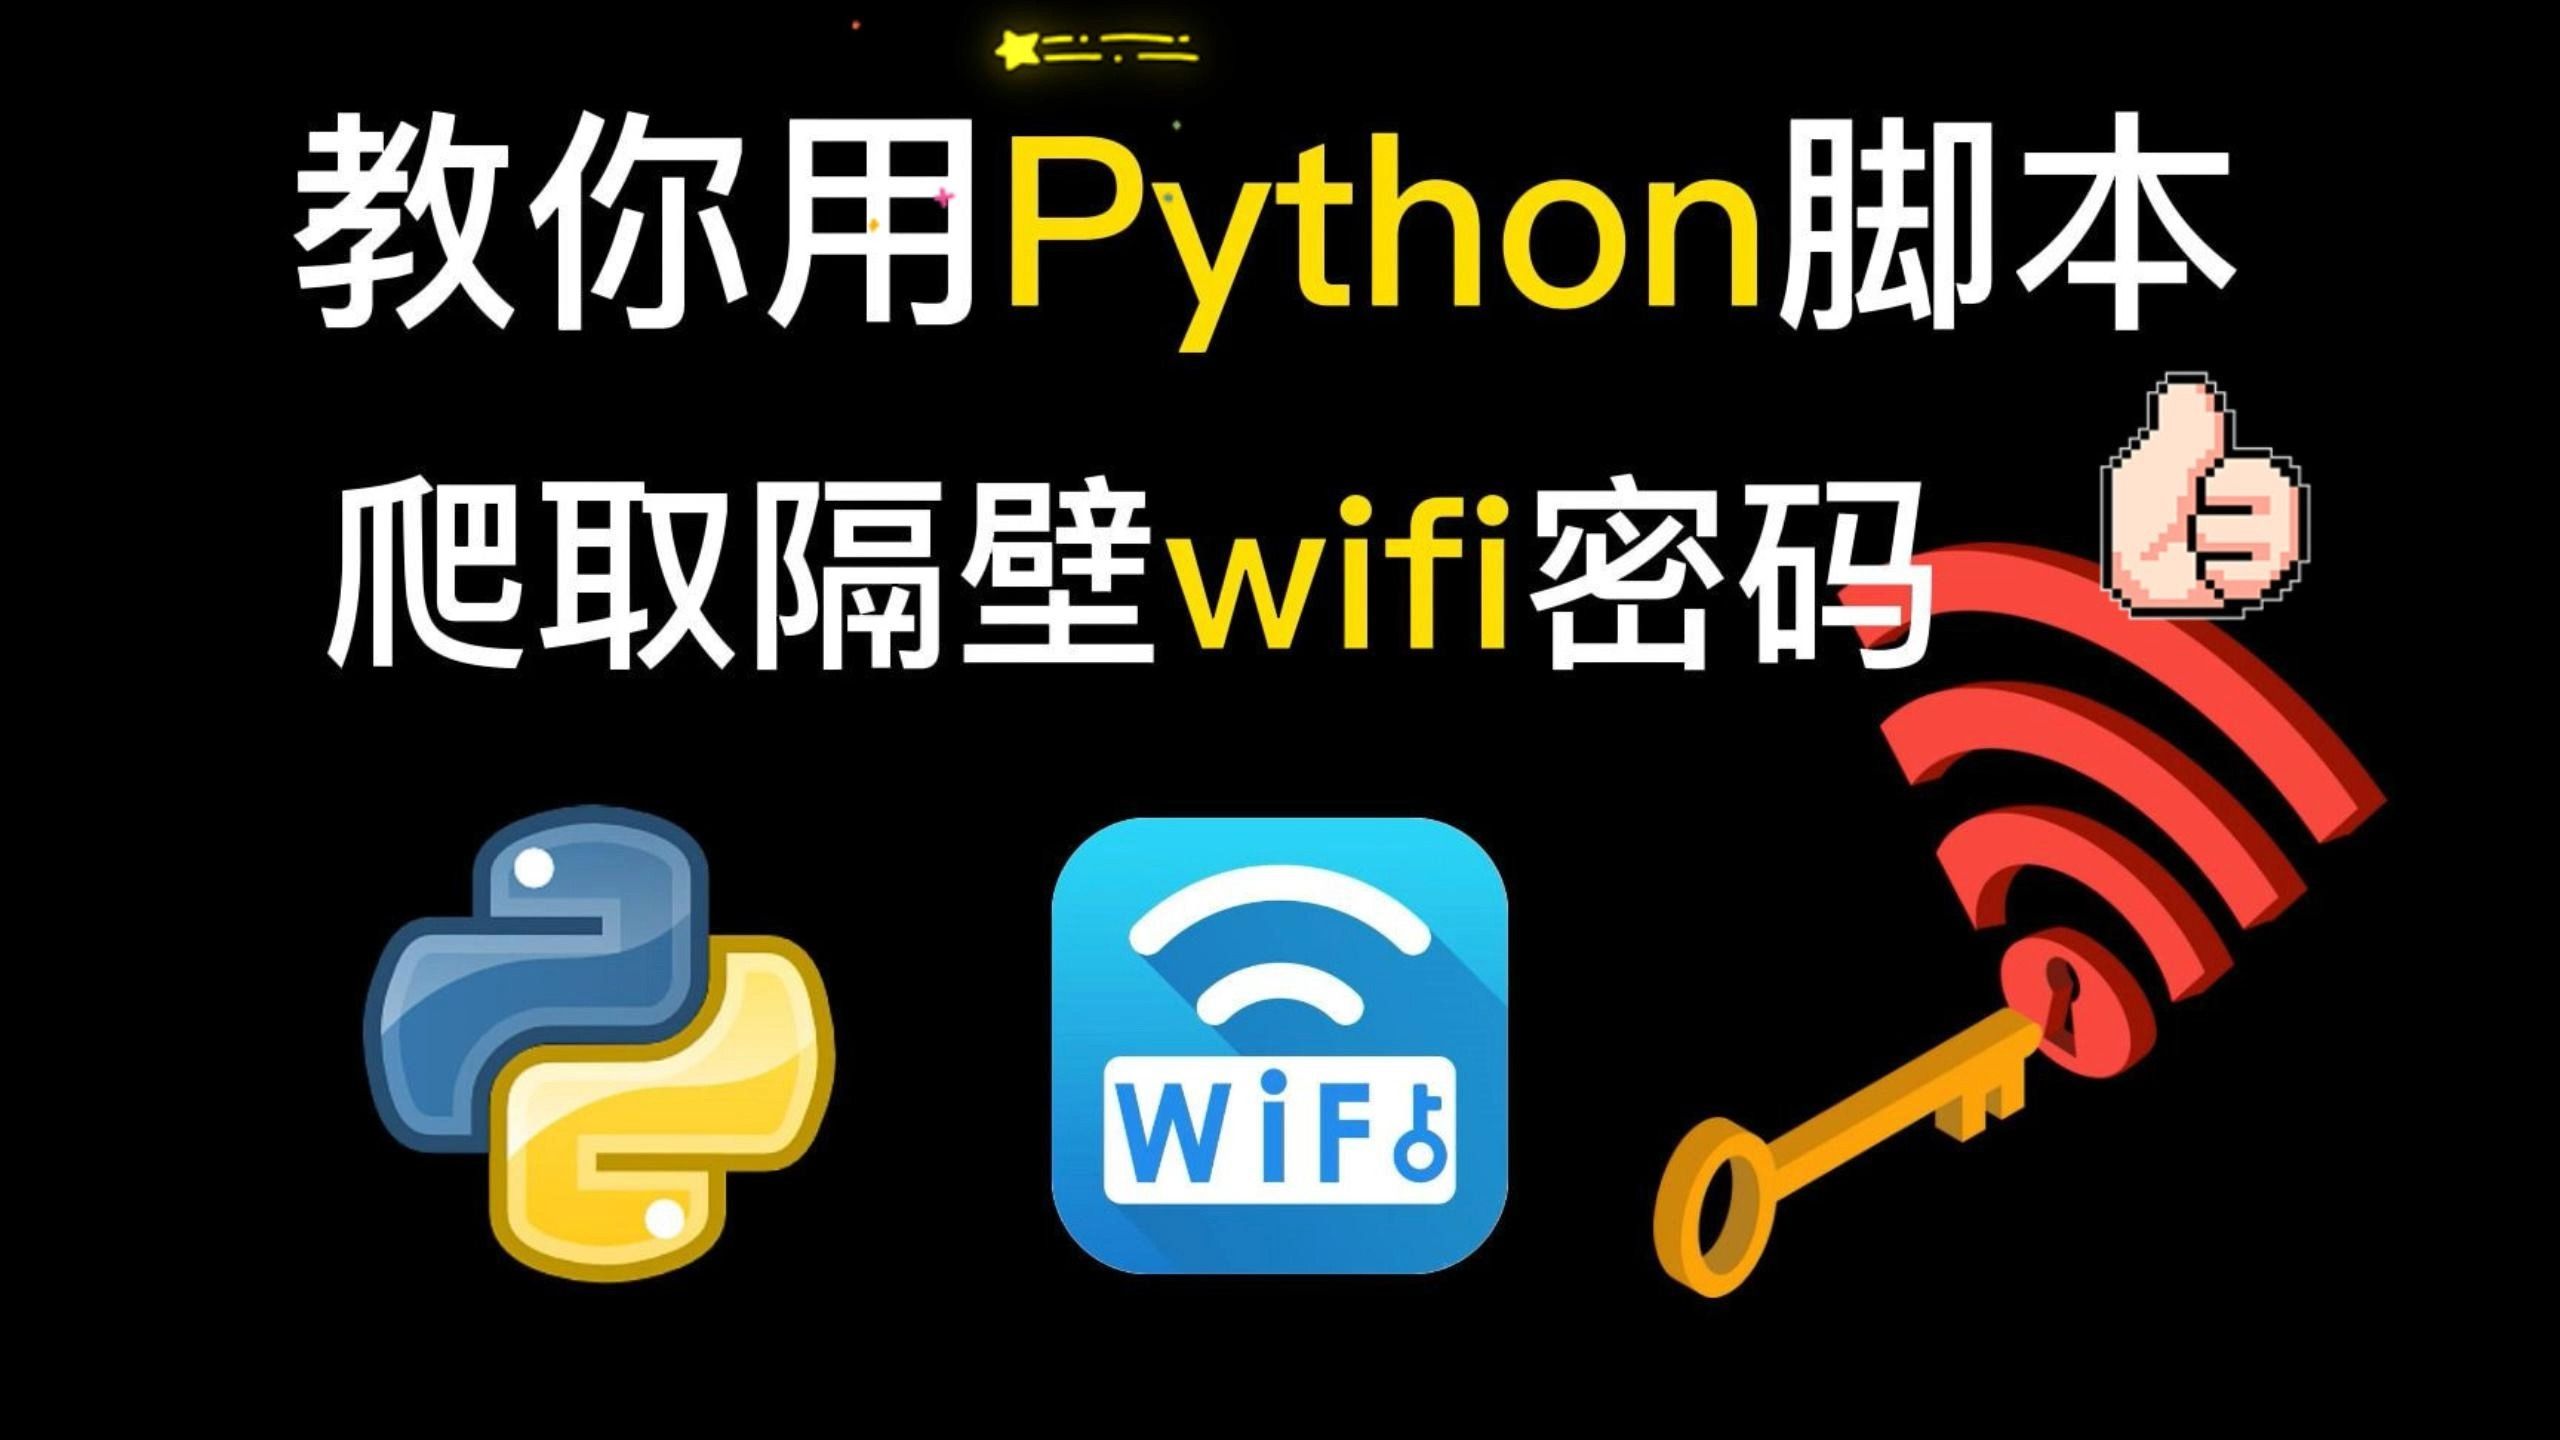 【python源码】什么？流量不够用了？快和我一起用python白嫖WiFi实现WiFi自由吧！